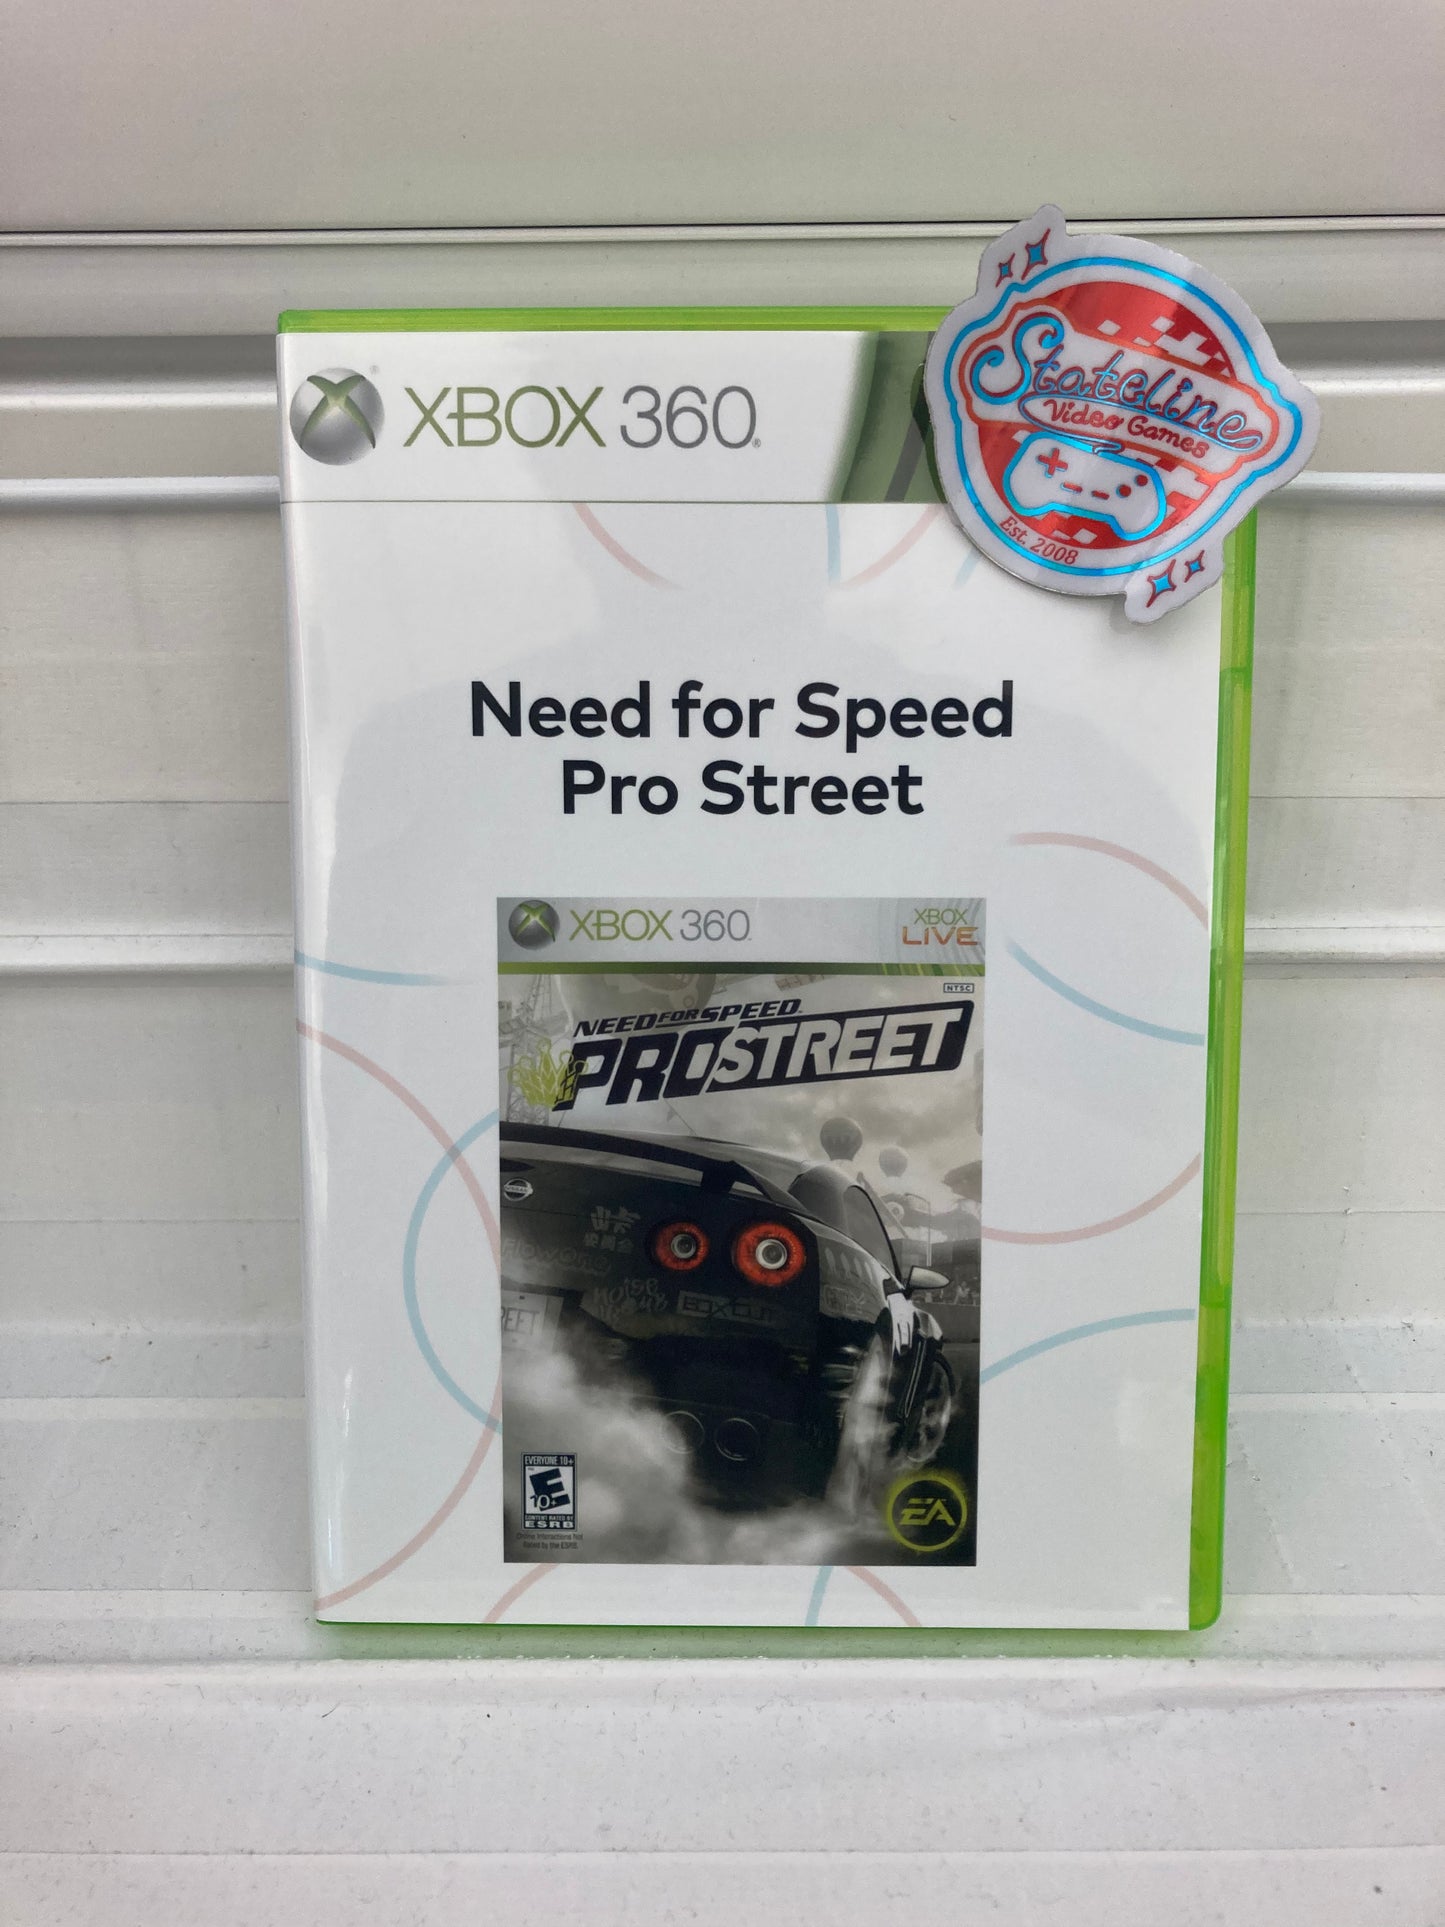 Need for Speed Prostreet - Xbox 360